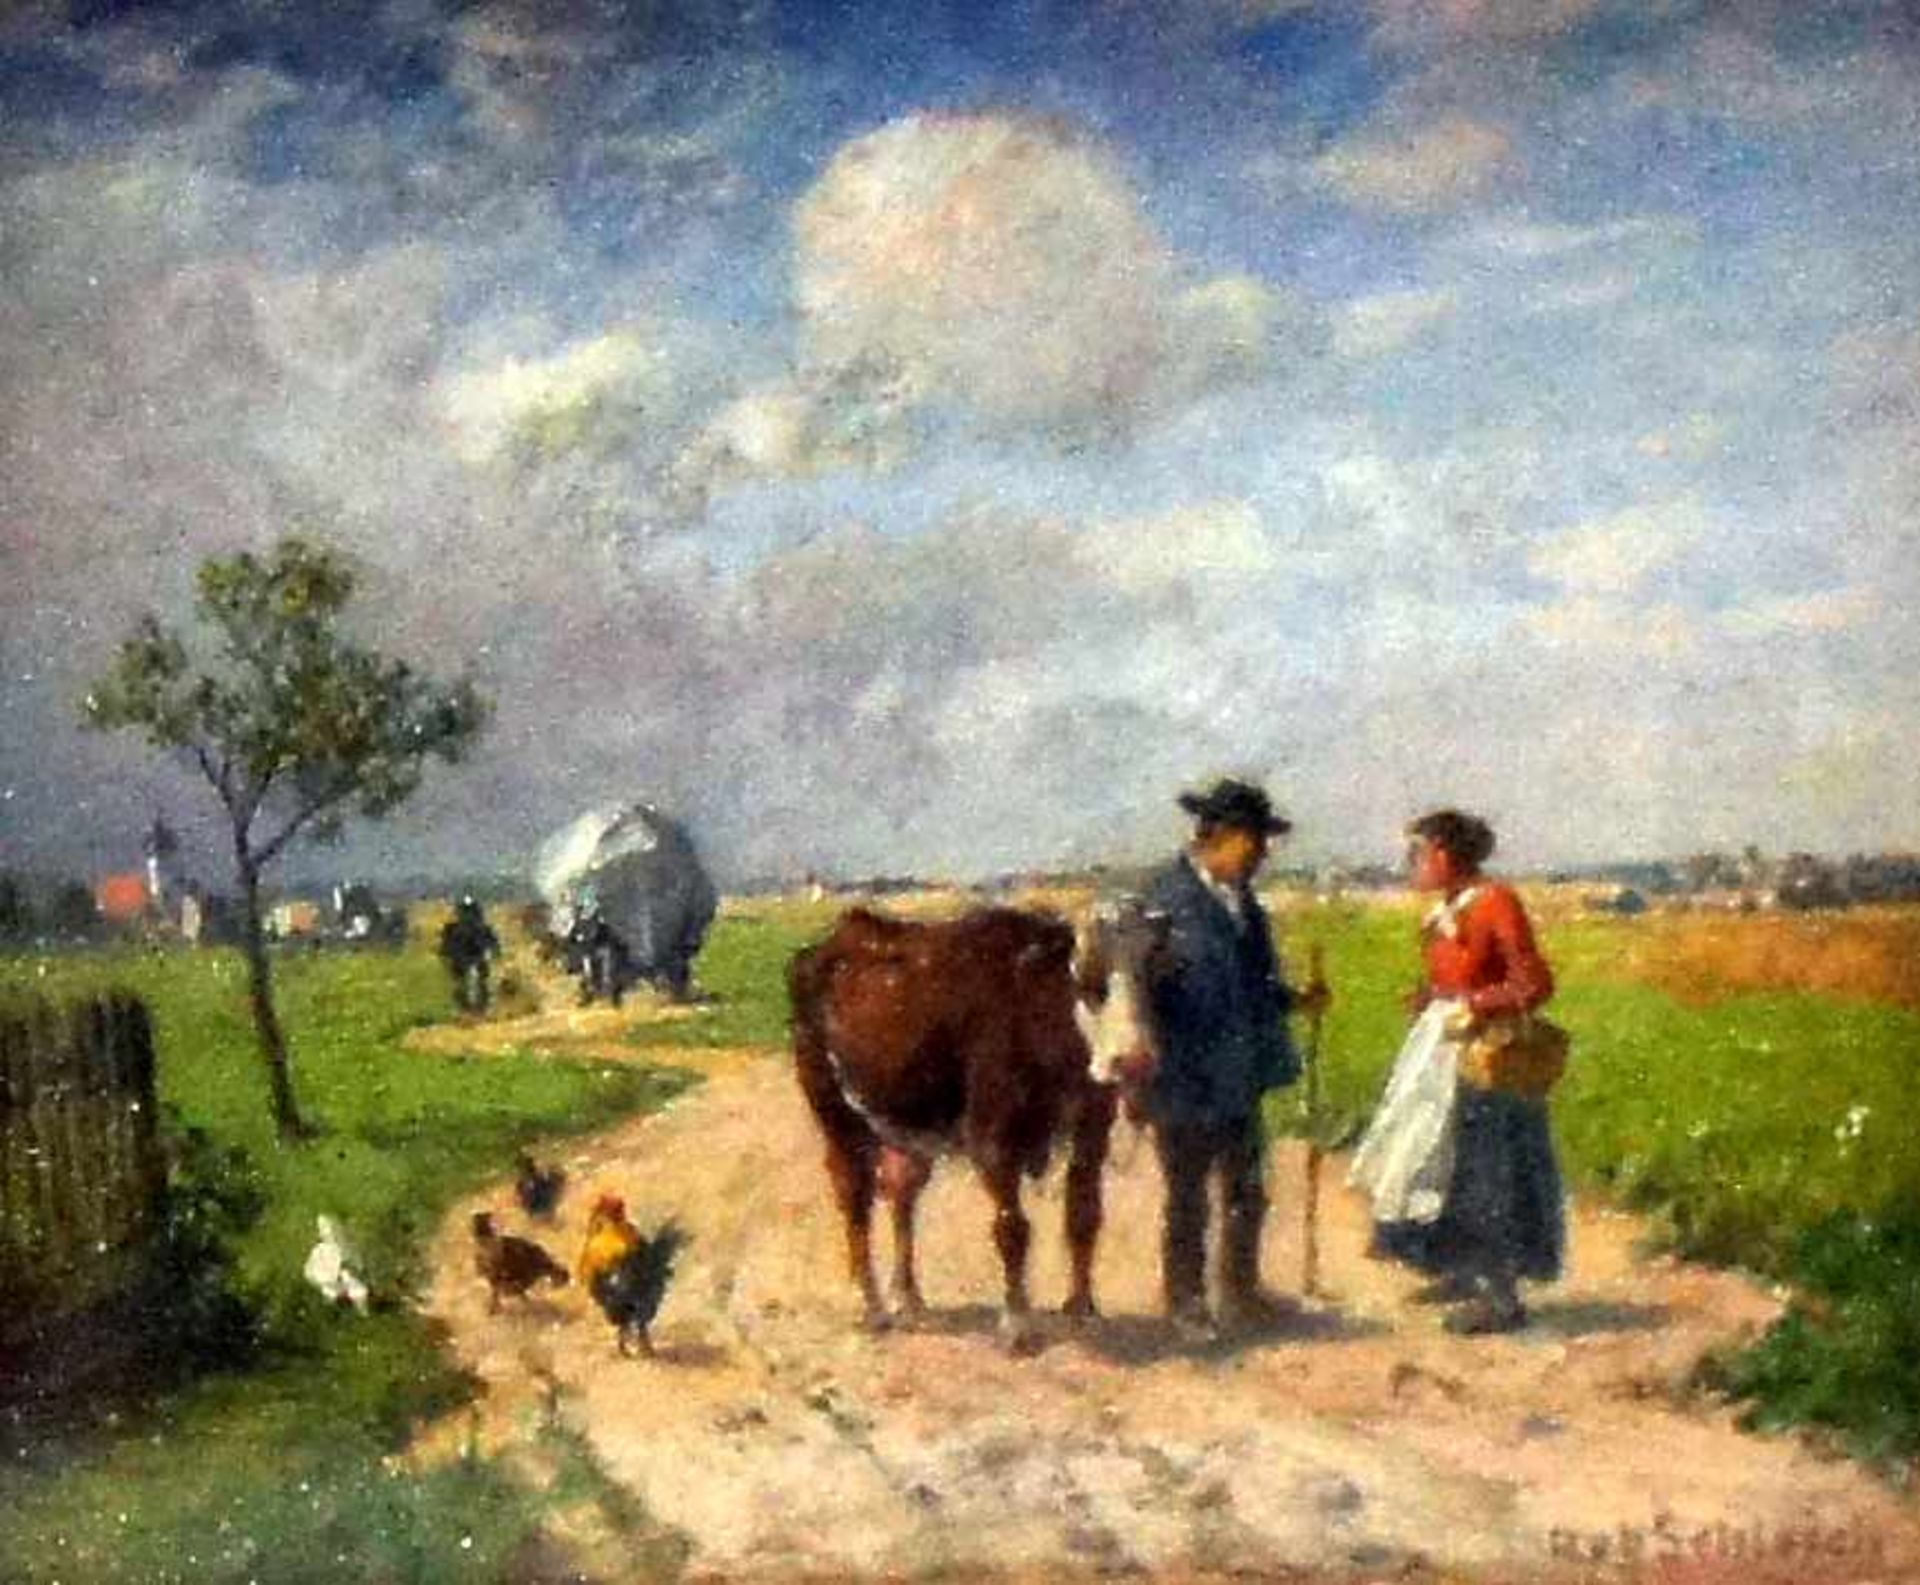 Robert Schleich, 1845 München - 1934 ebendaÖl/Holz. Plausch auf dem Feldweg. Nach einem Studium an